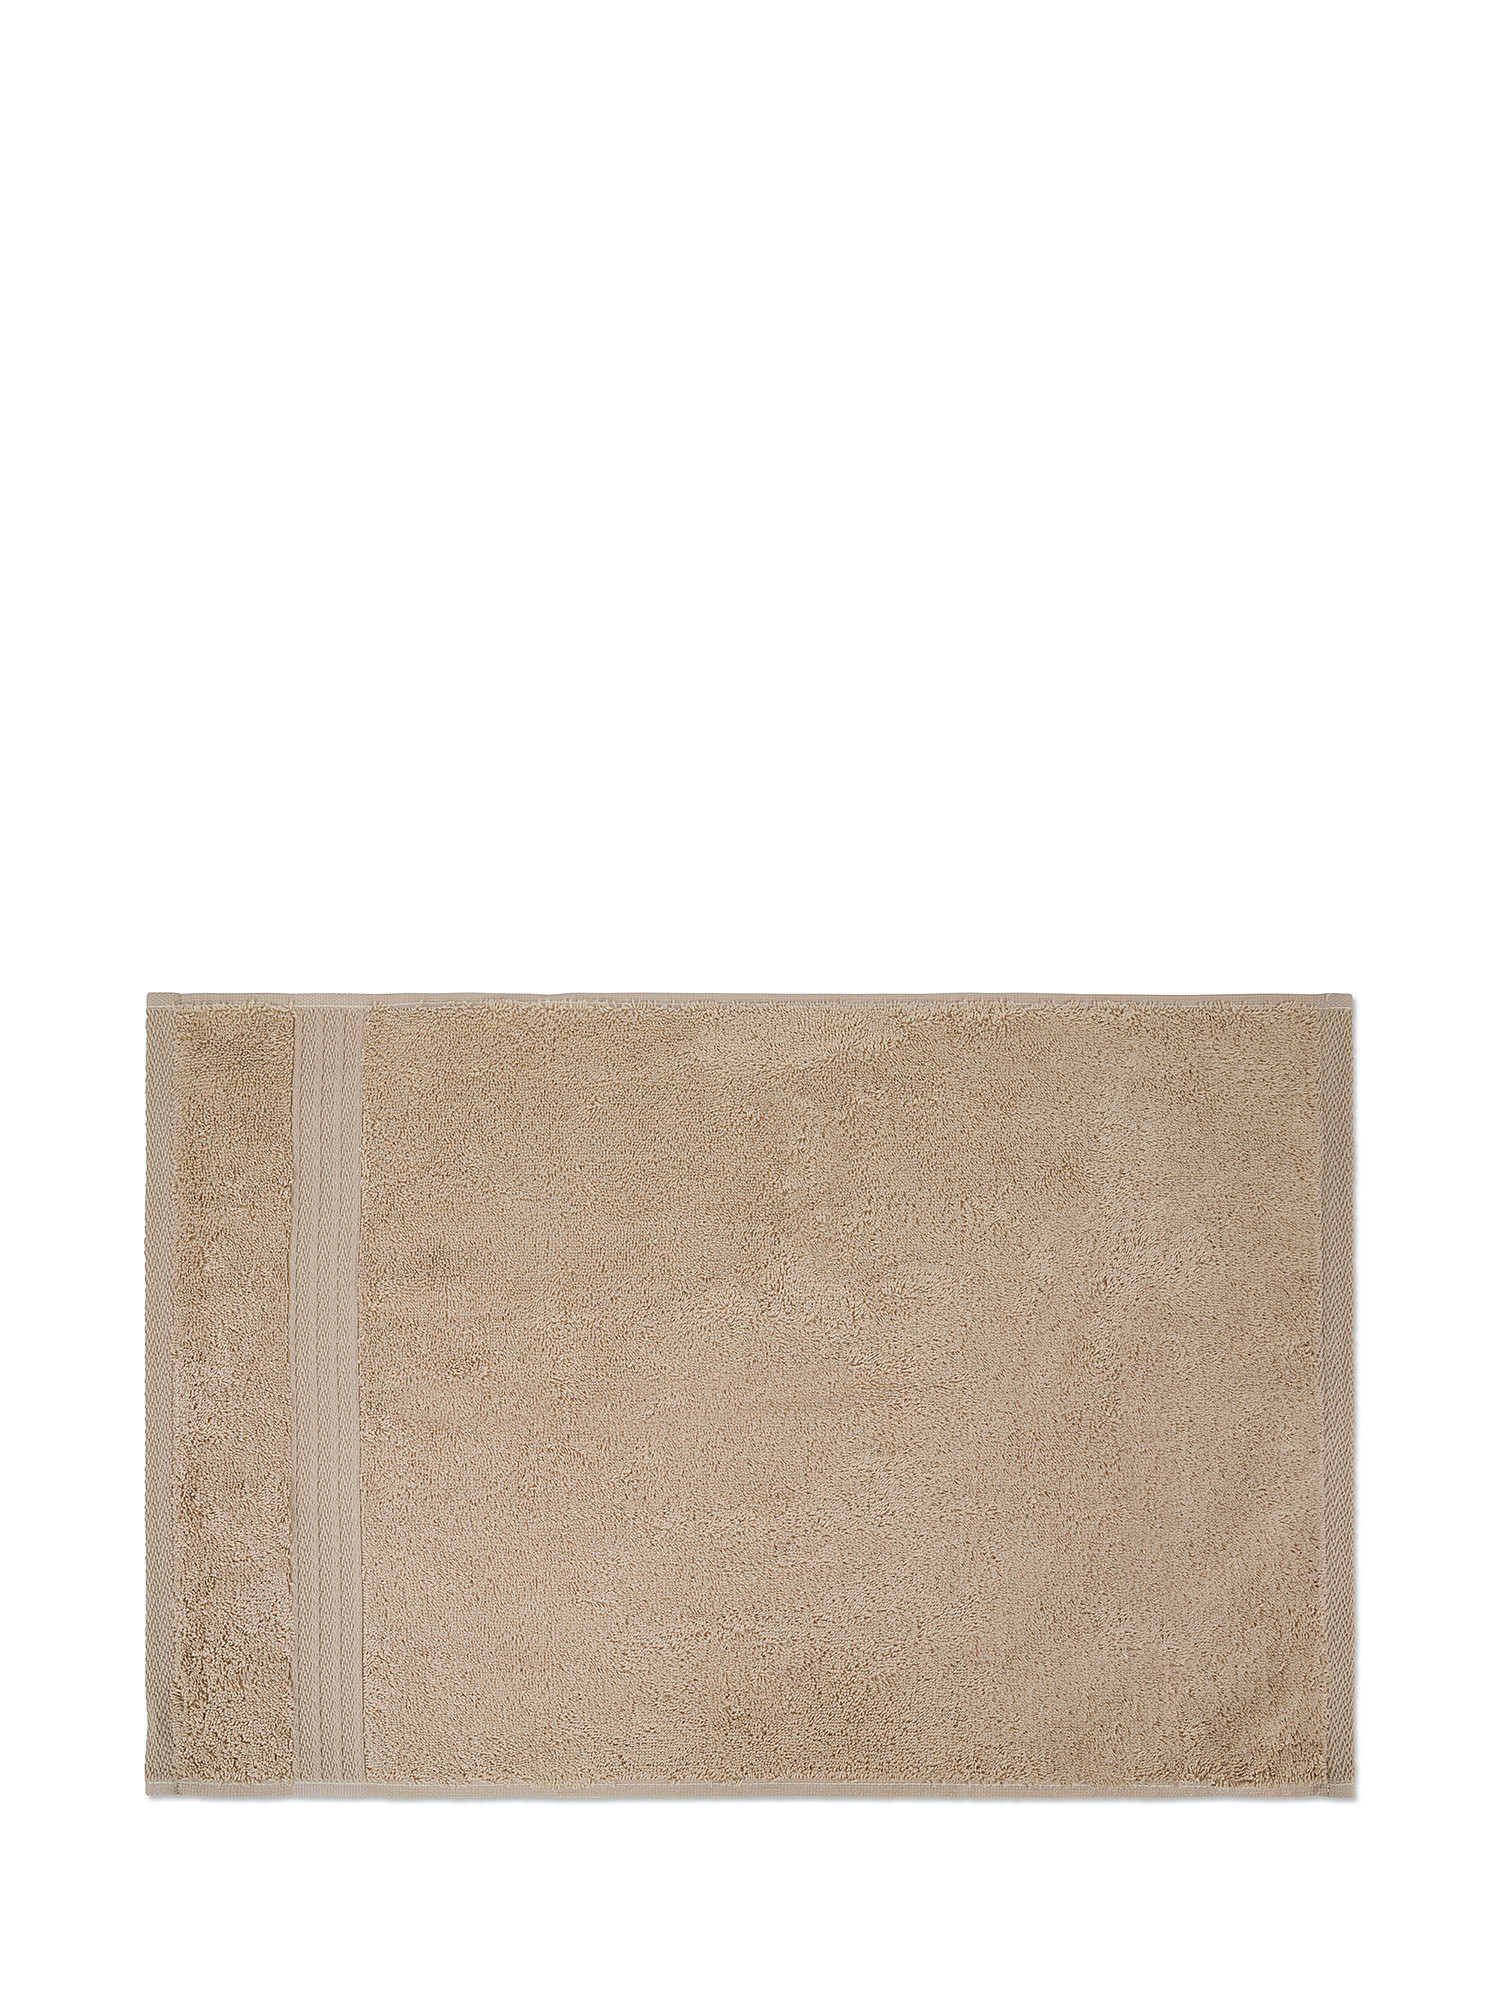 Zefiro solid color 100% cotton towel, Beige, large image number 1